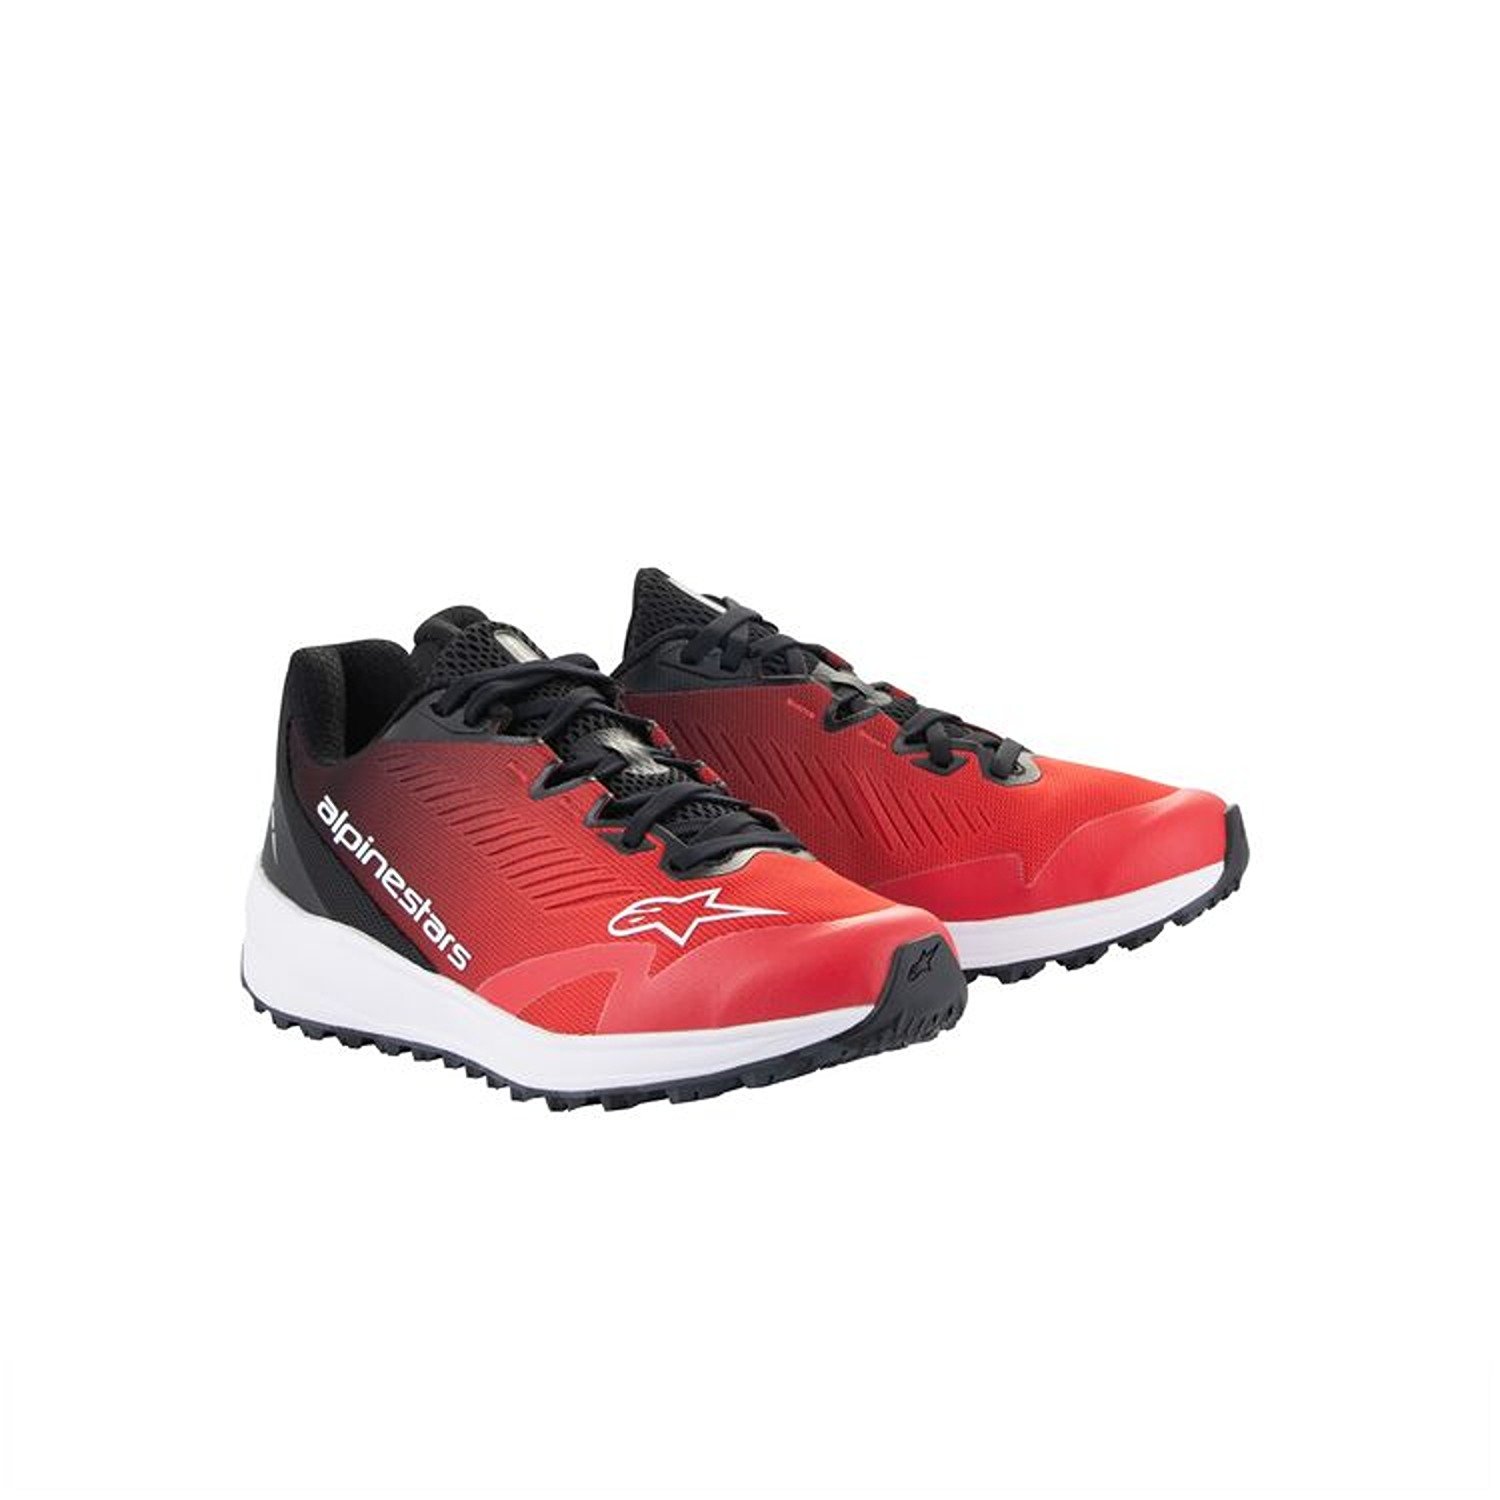 Image of Alpinestars Meta Road V2 Shoes Red Black White Talla US 5